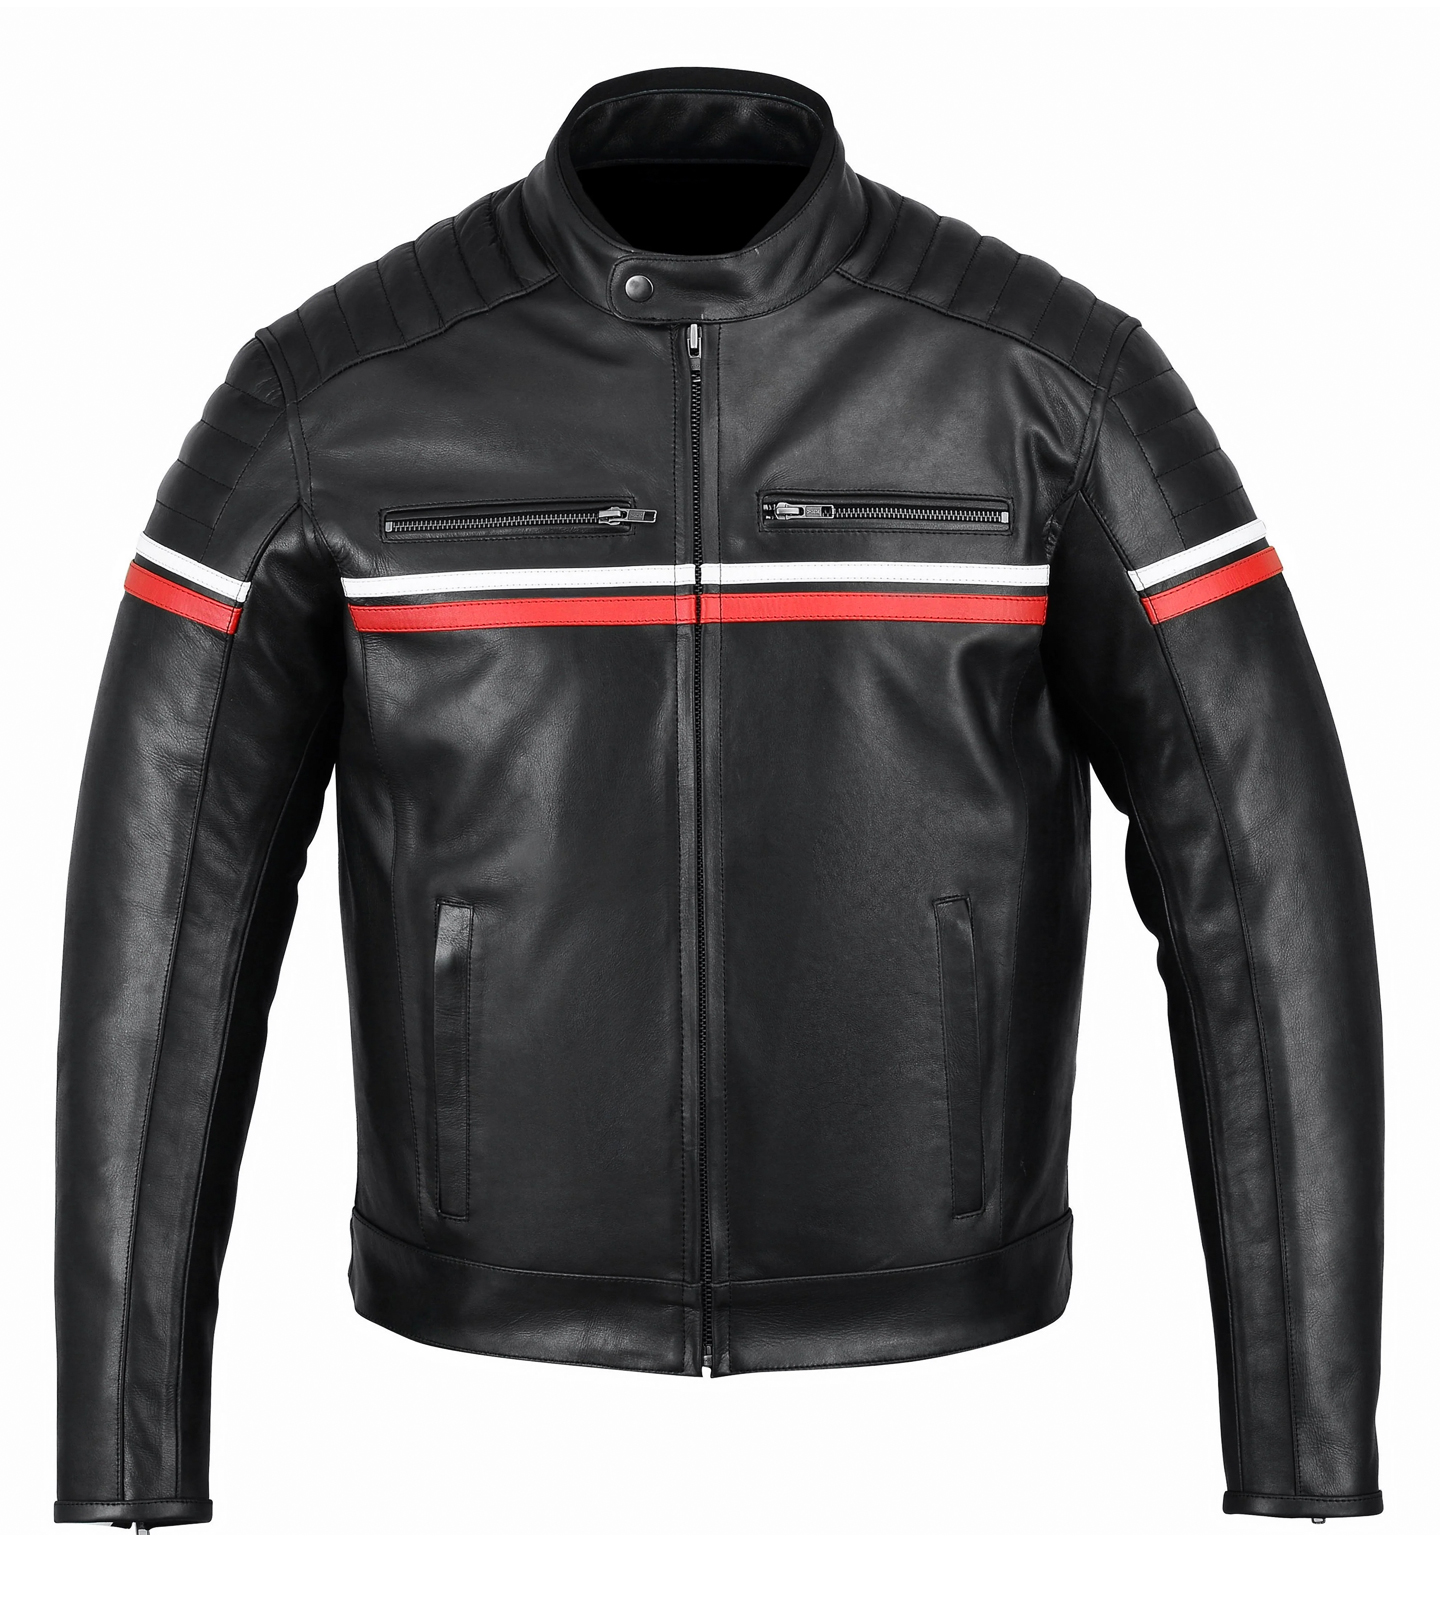 Metropolis Biker Leather Jacket With A Red Stripe